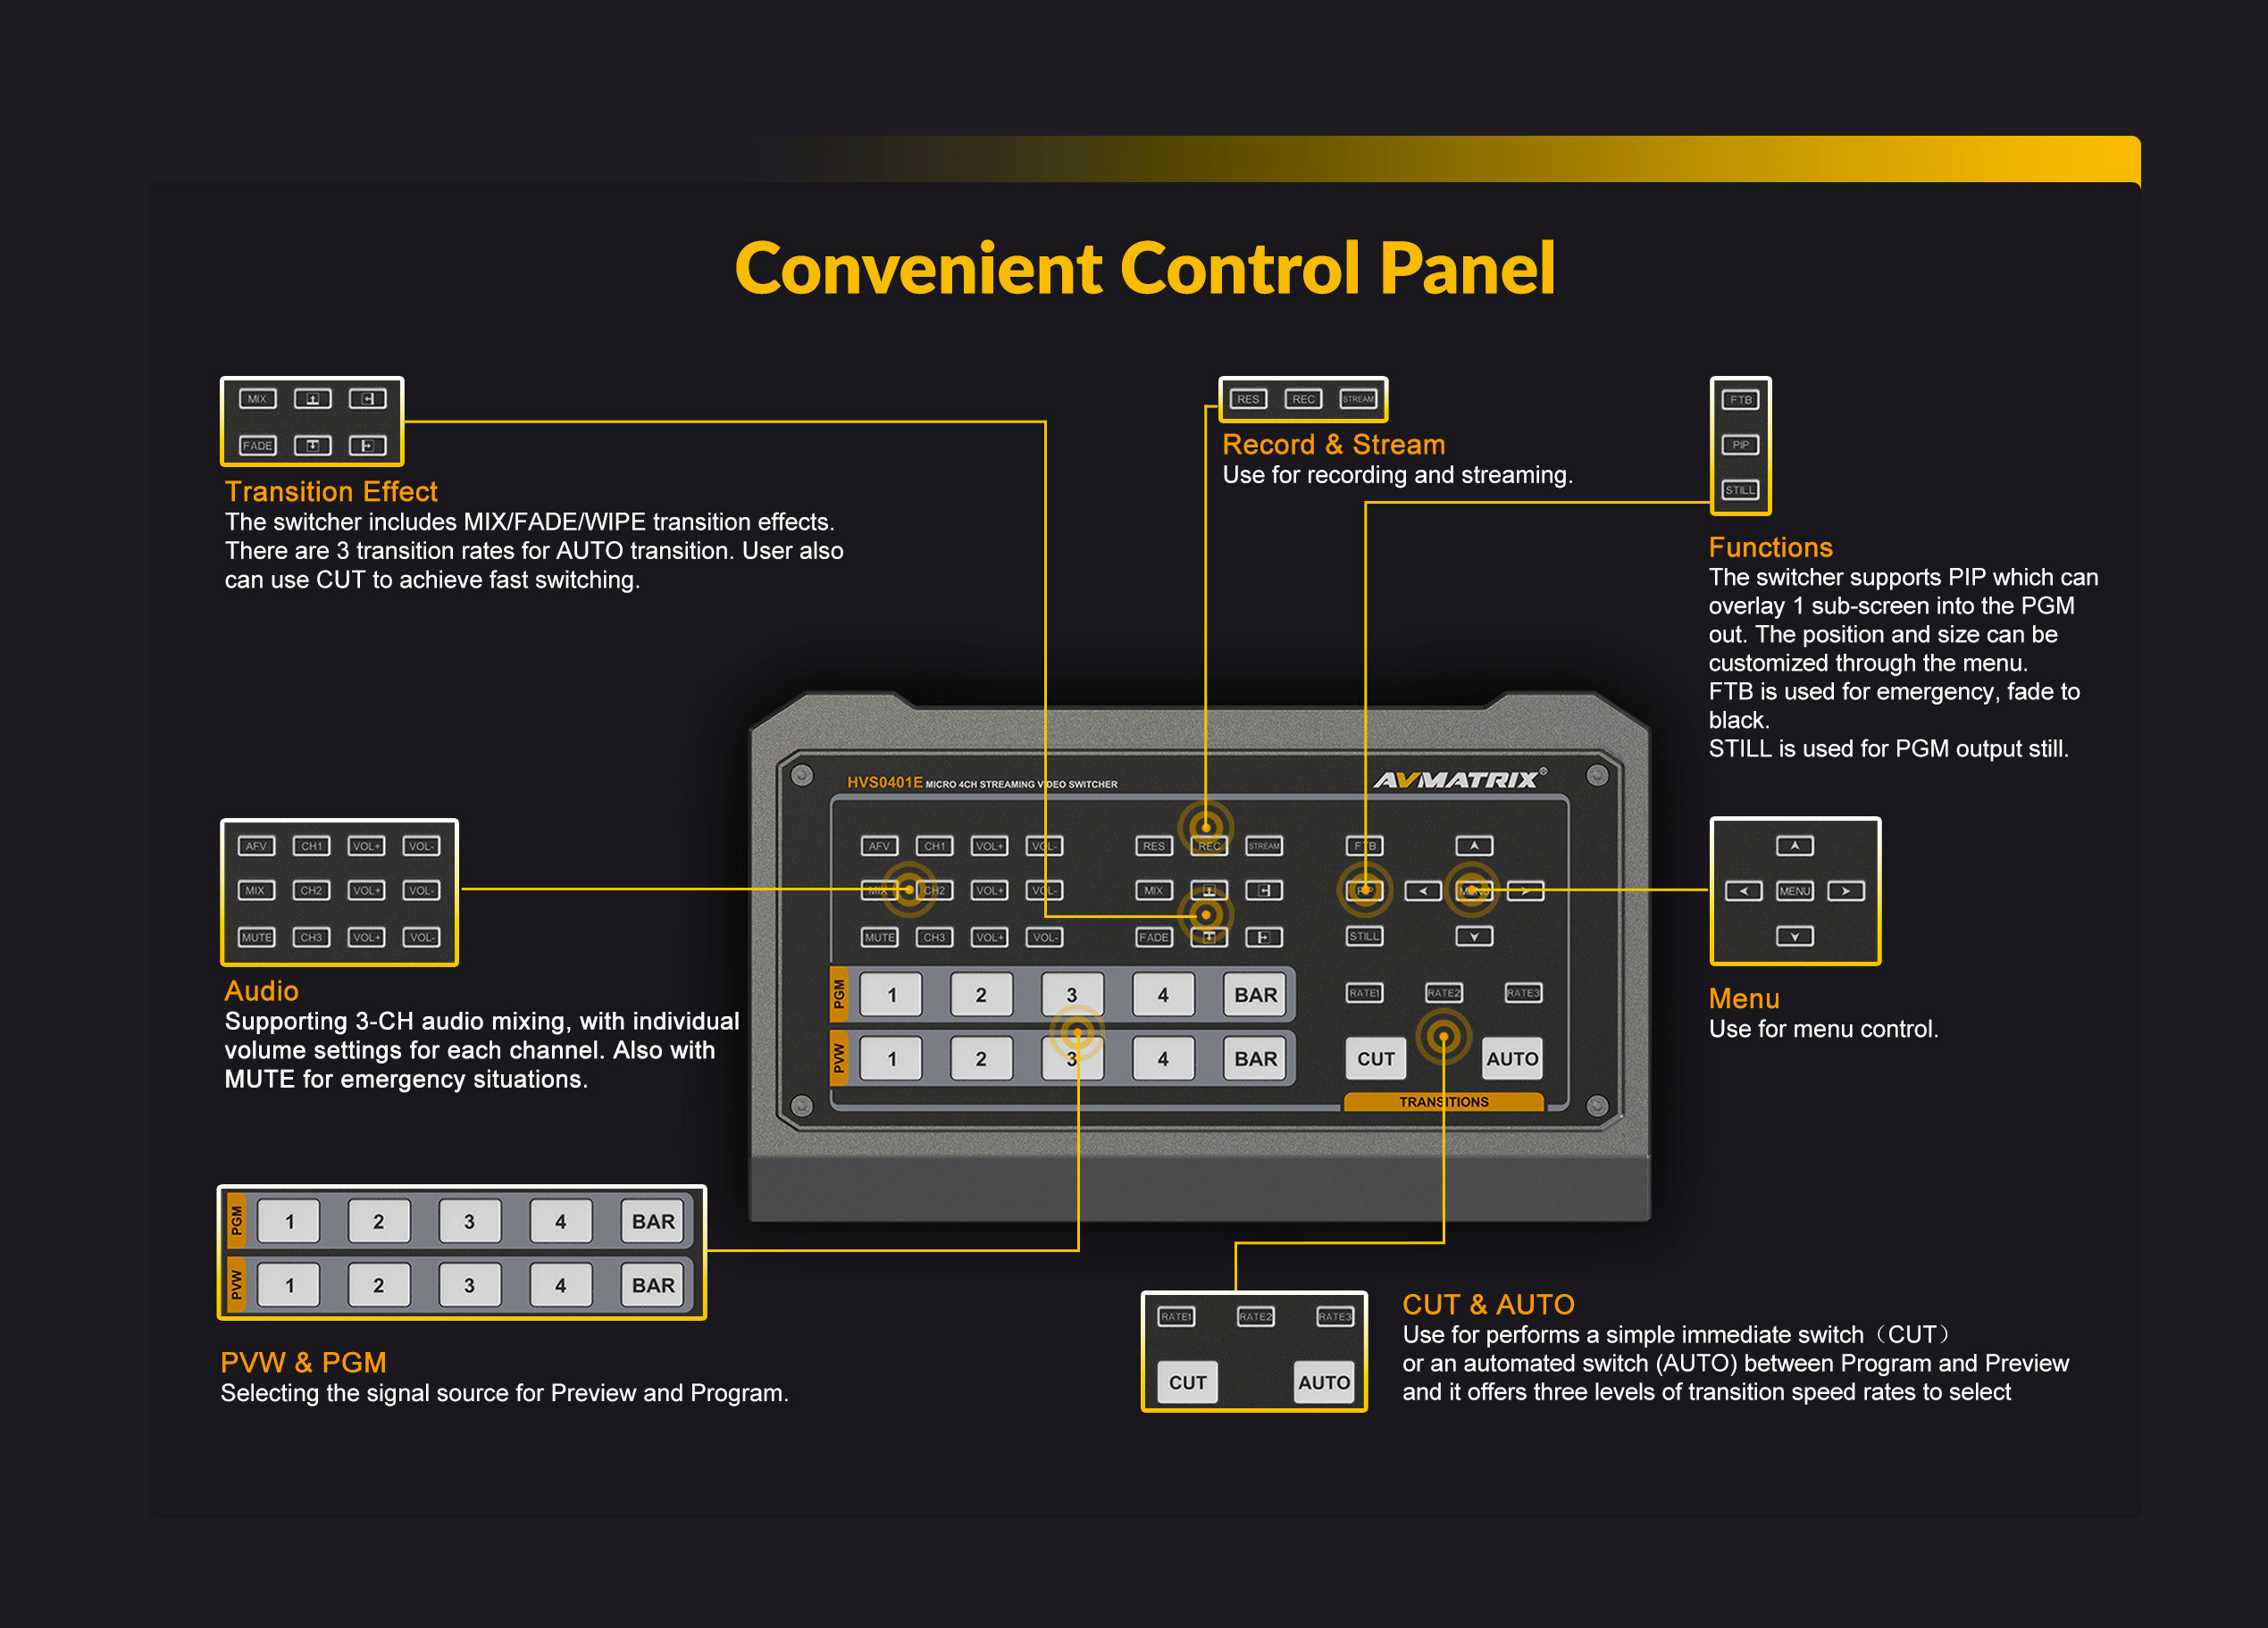 Convenient Control Panel